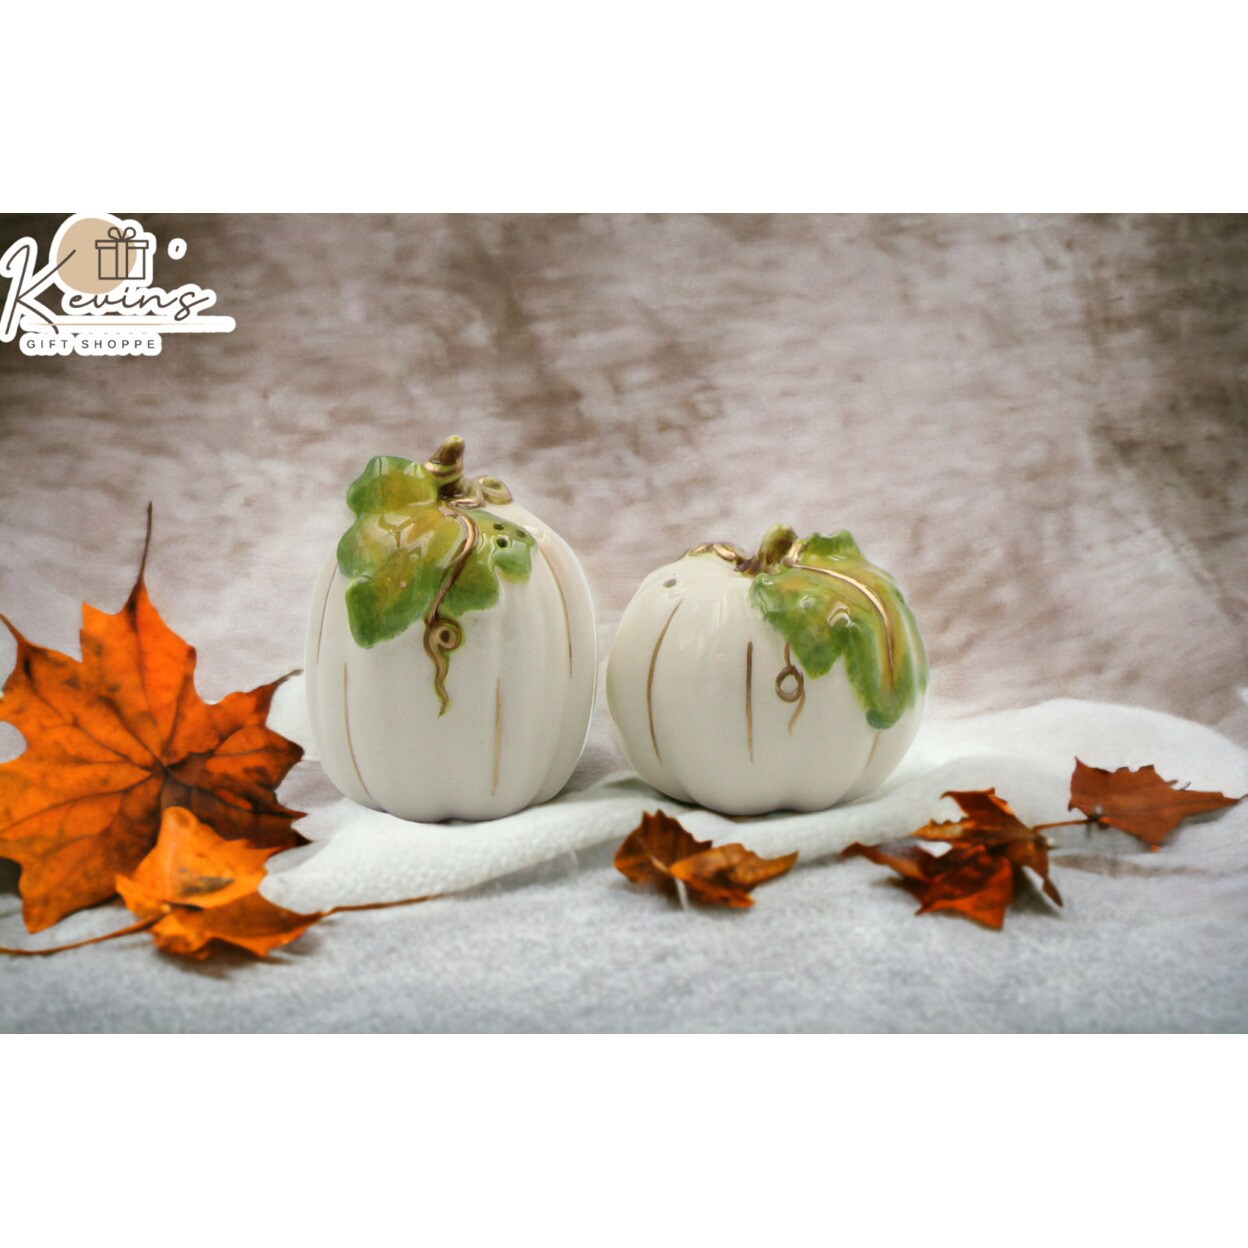 kevinsgiftshoppe Ceramic Autumn Harvest  White Pumpkin Salt and Pepper Shakers   Kitchen Decor Fall Decor